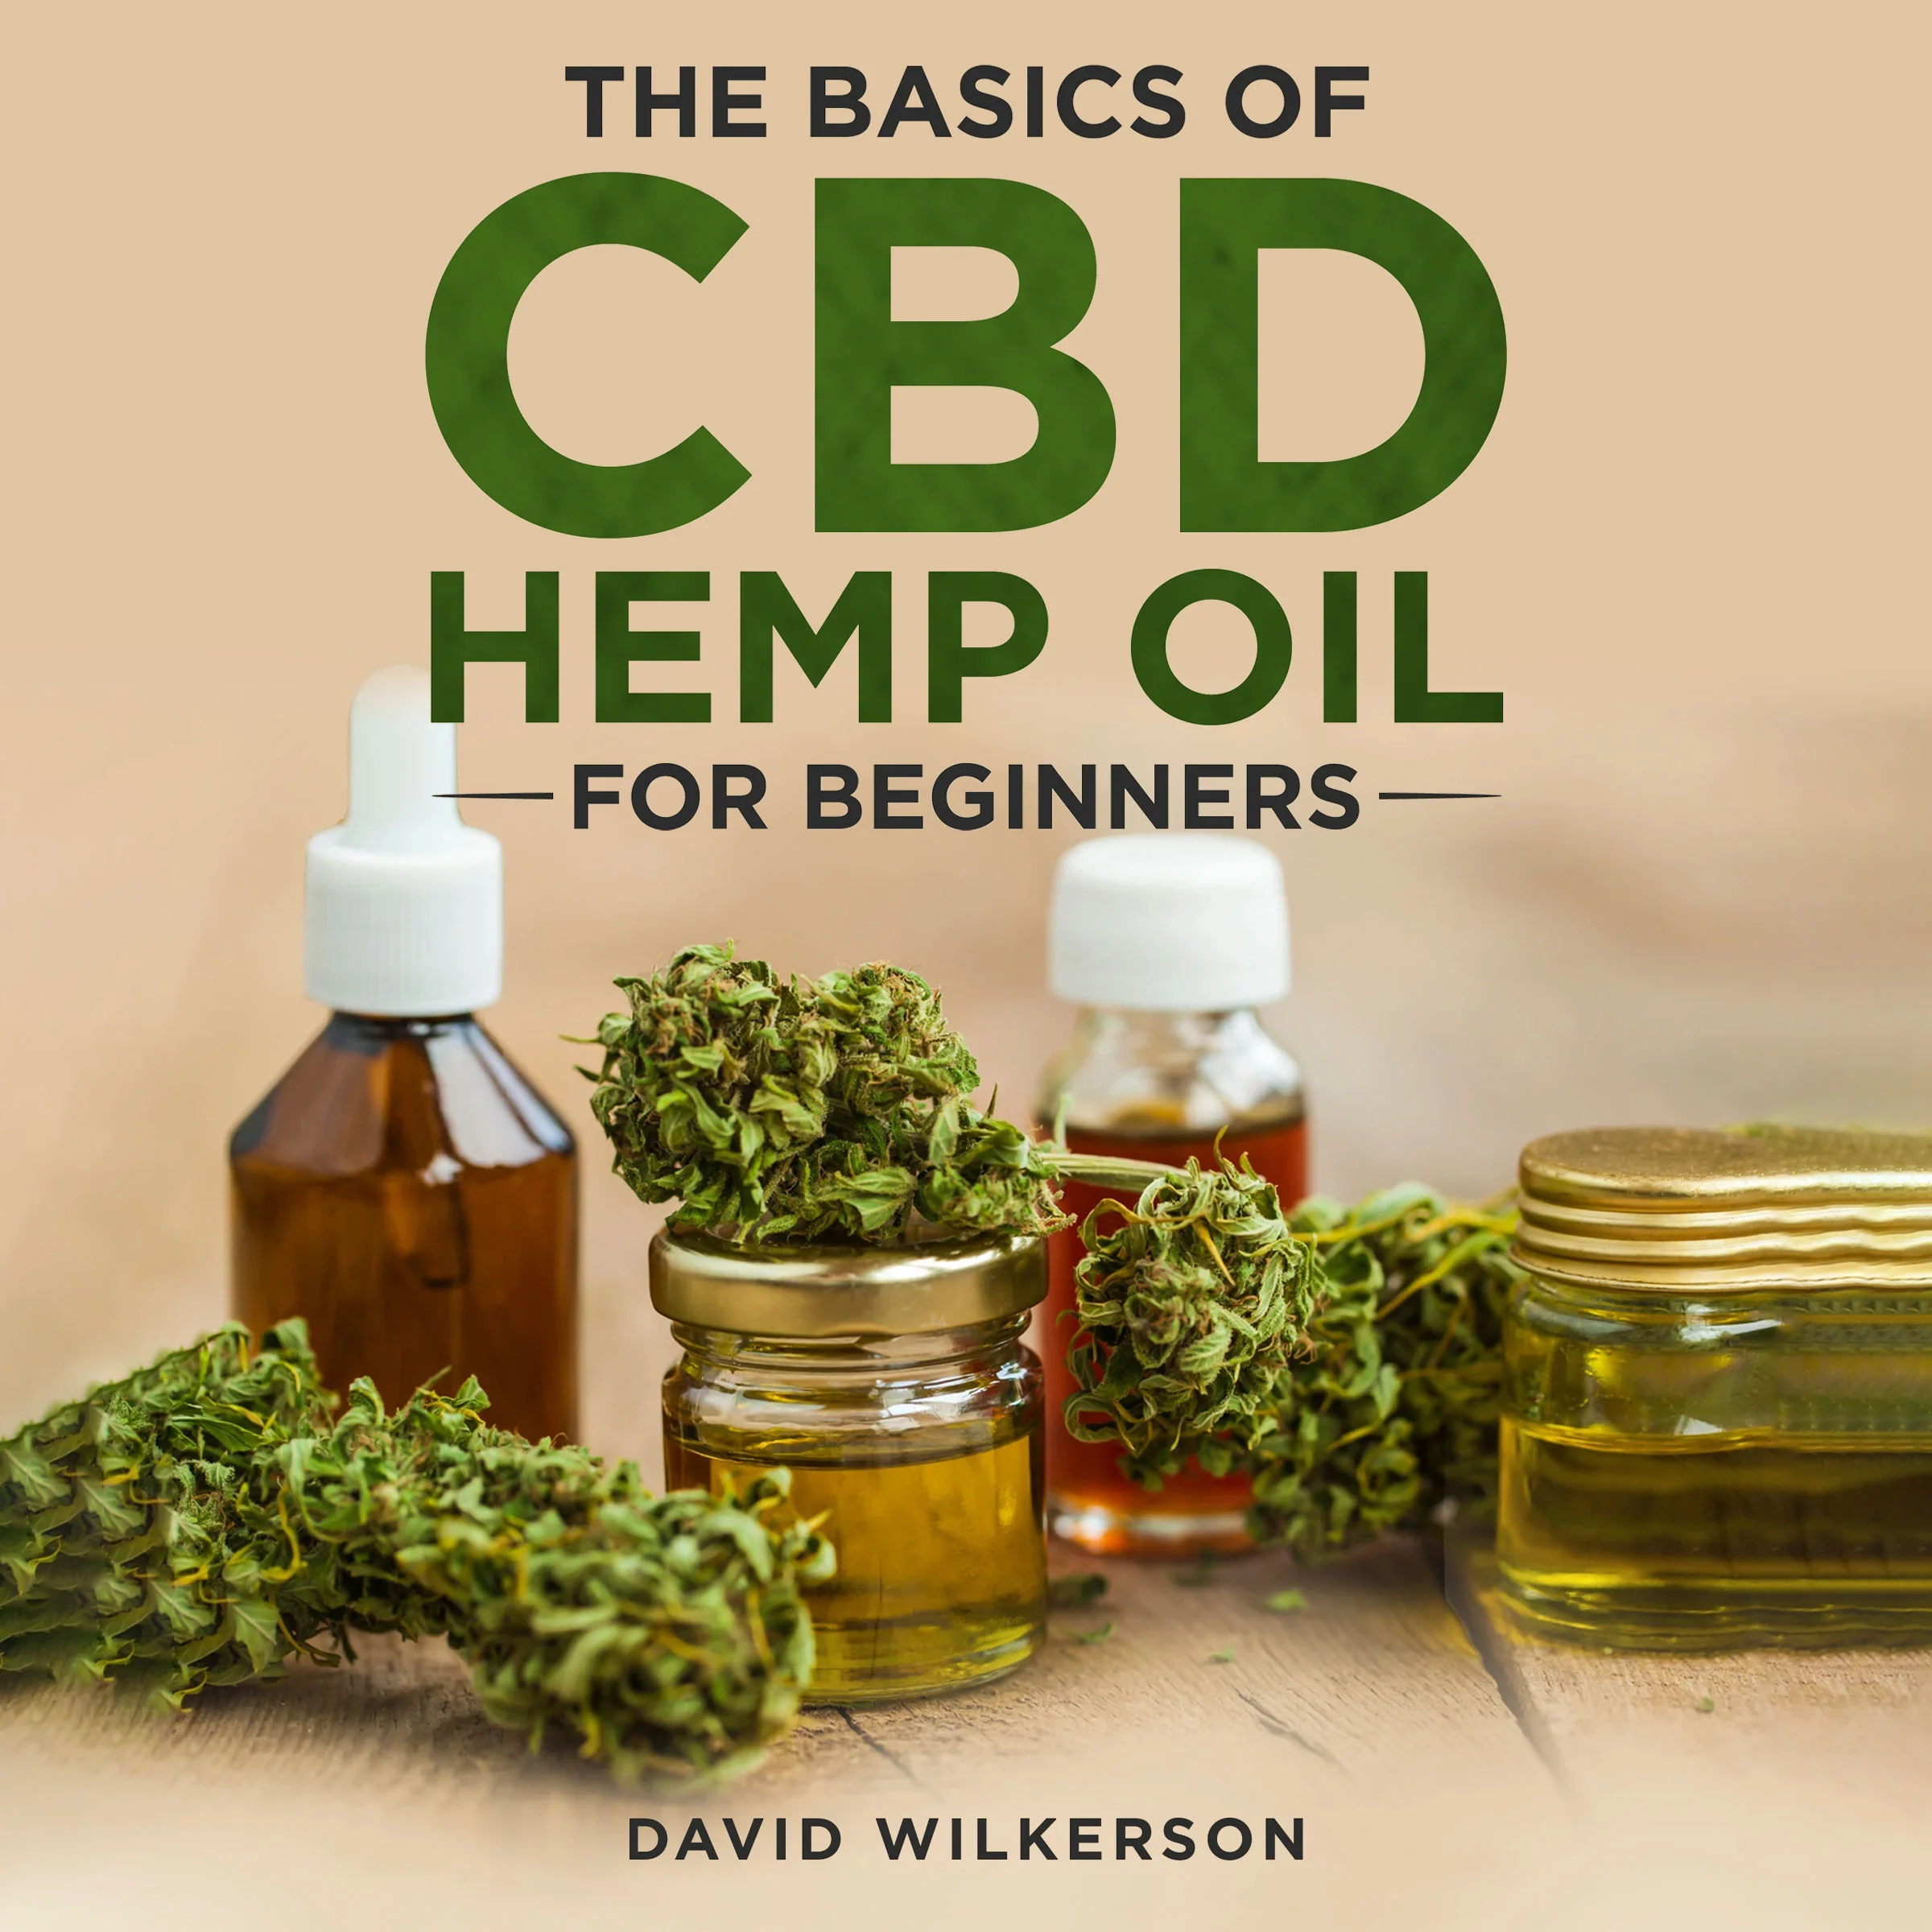 The Basics Of CBD Hemp Oil For Beginners Audiobook by David Wilkerson